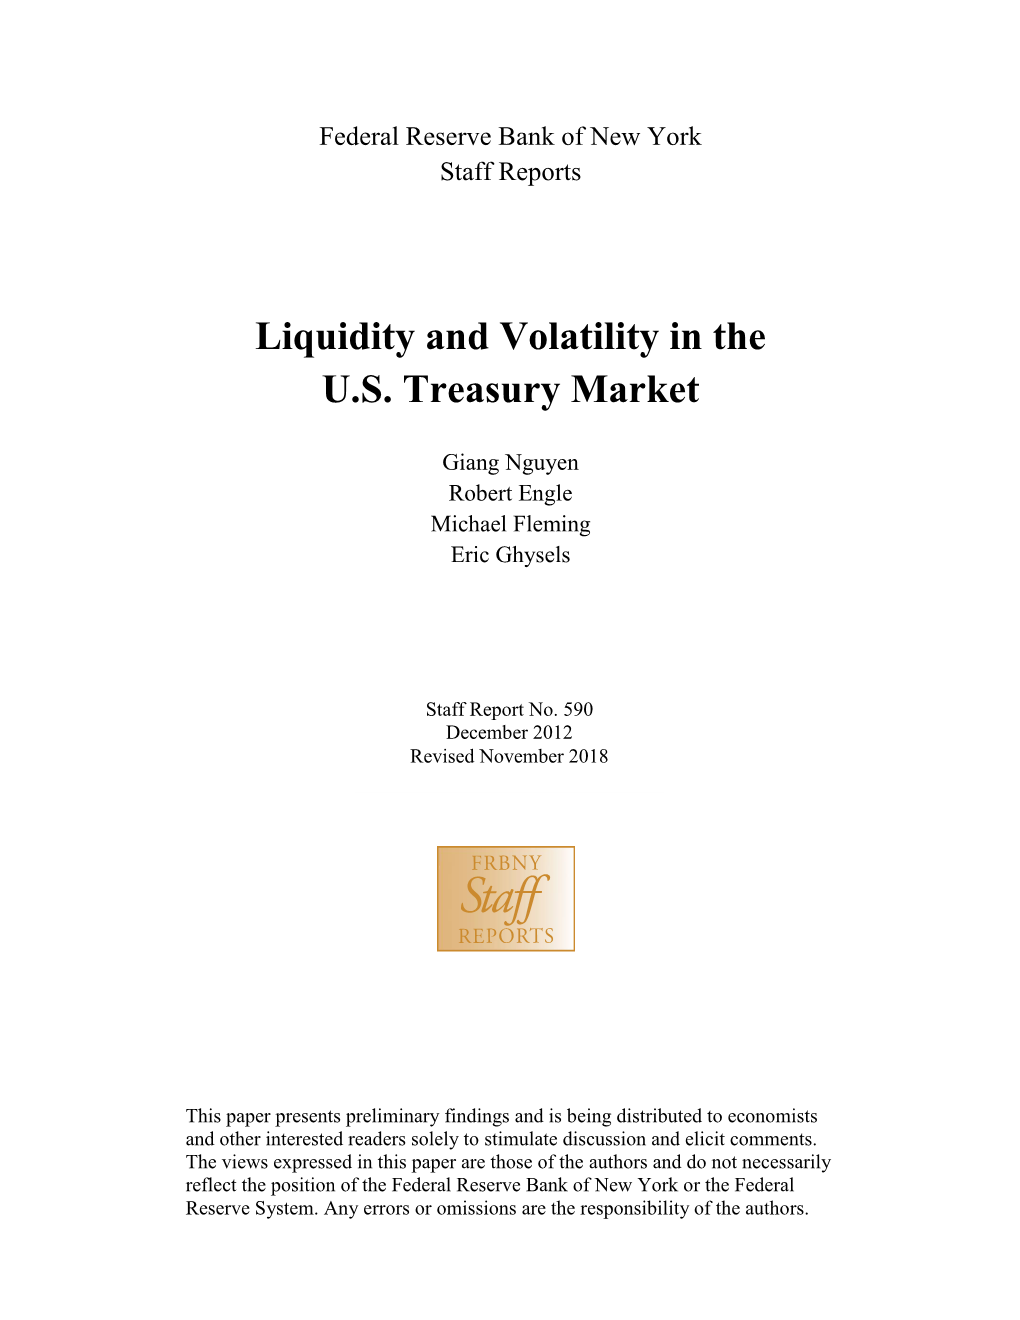 Liquidity and Volatility in the US Treasury Market